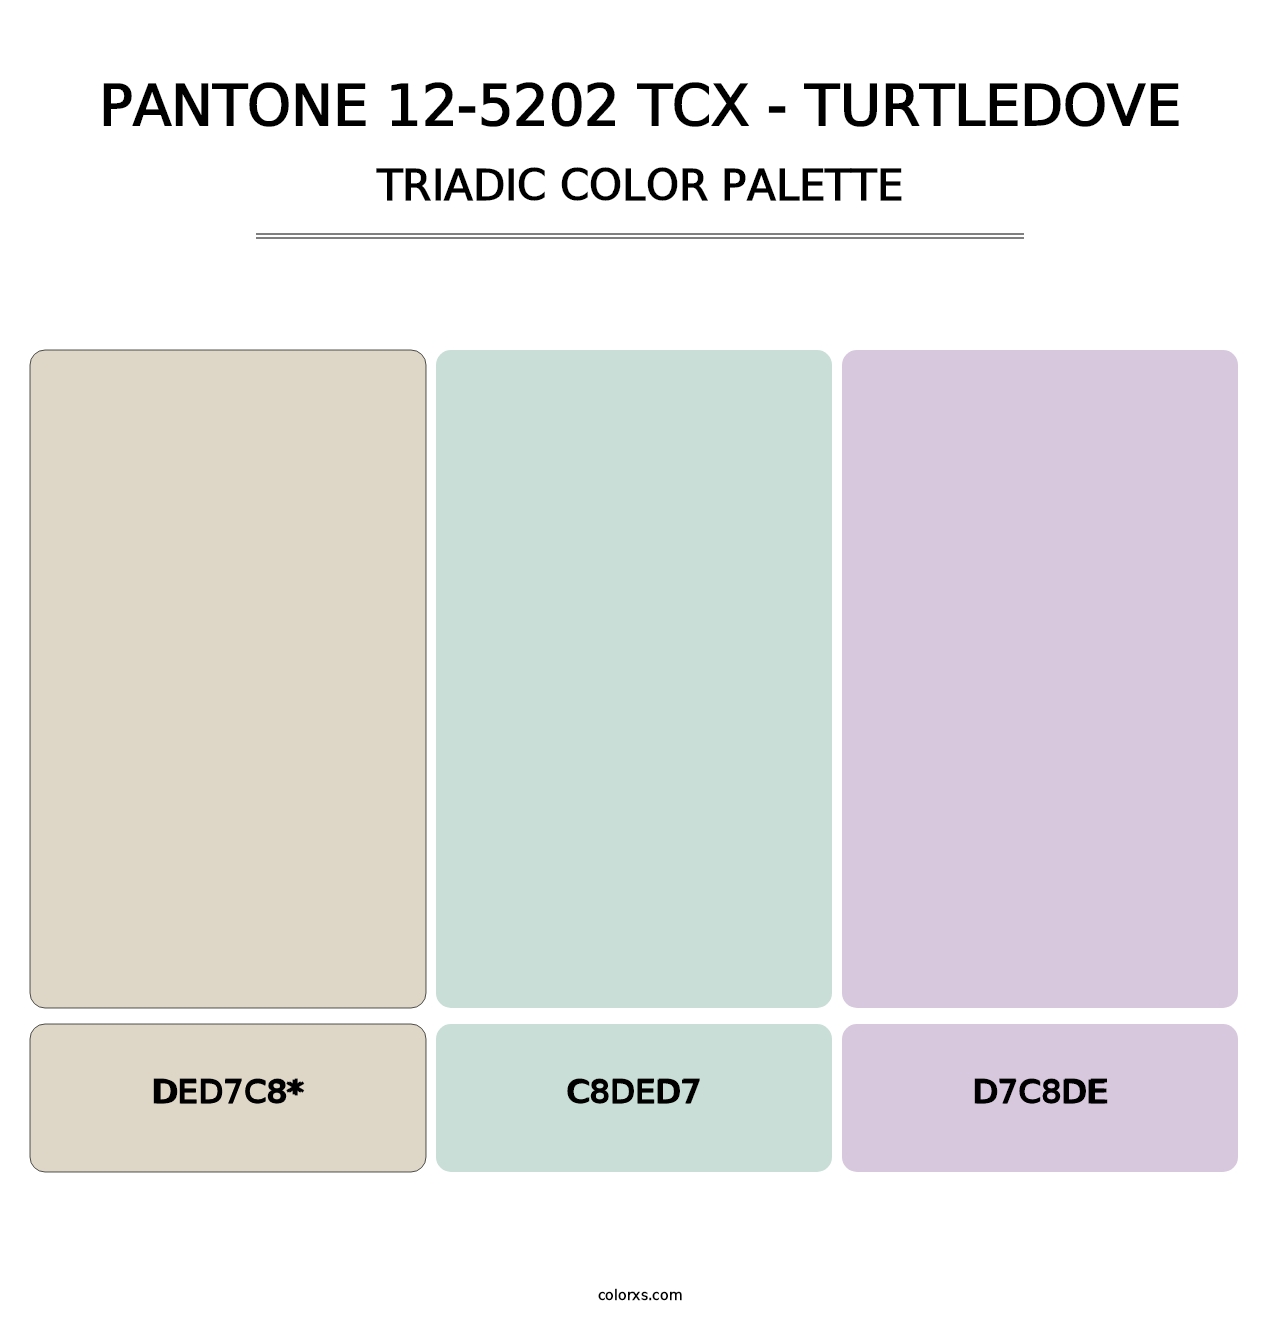 PANTONE 12-5202 TCX - Turtledove - Triadic Color Palette